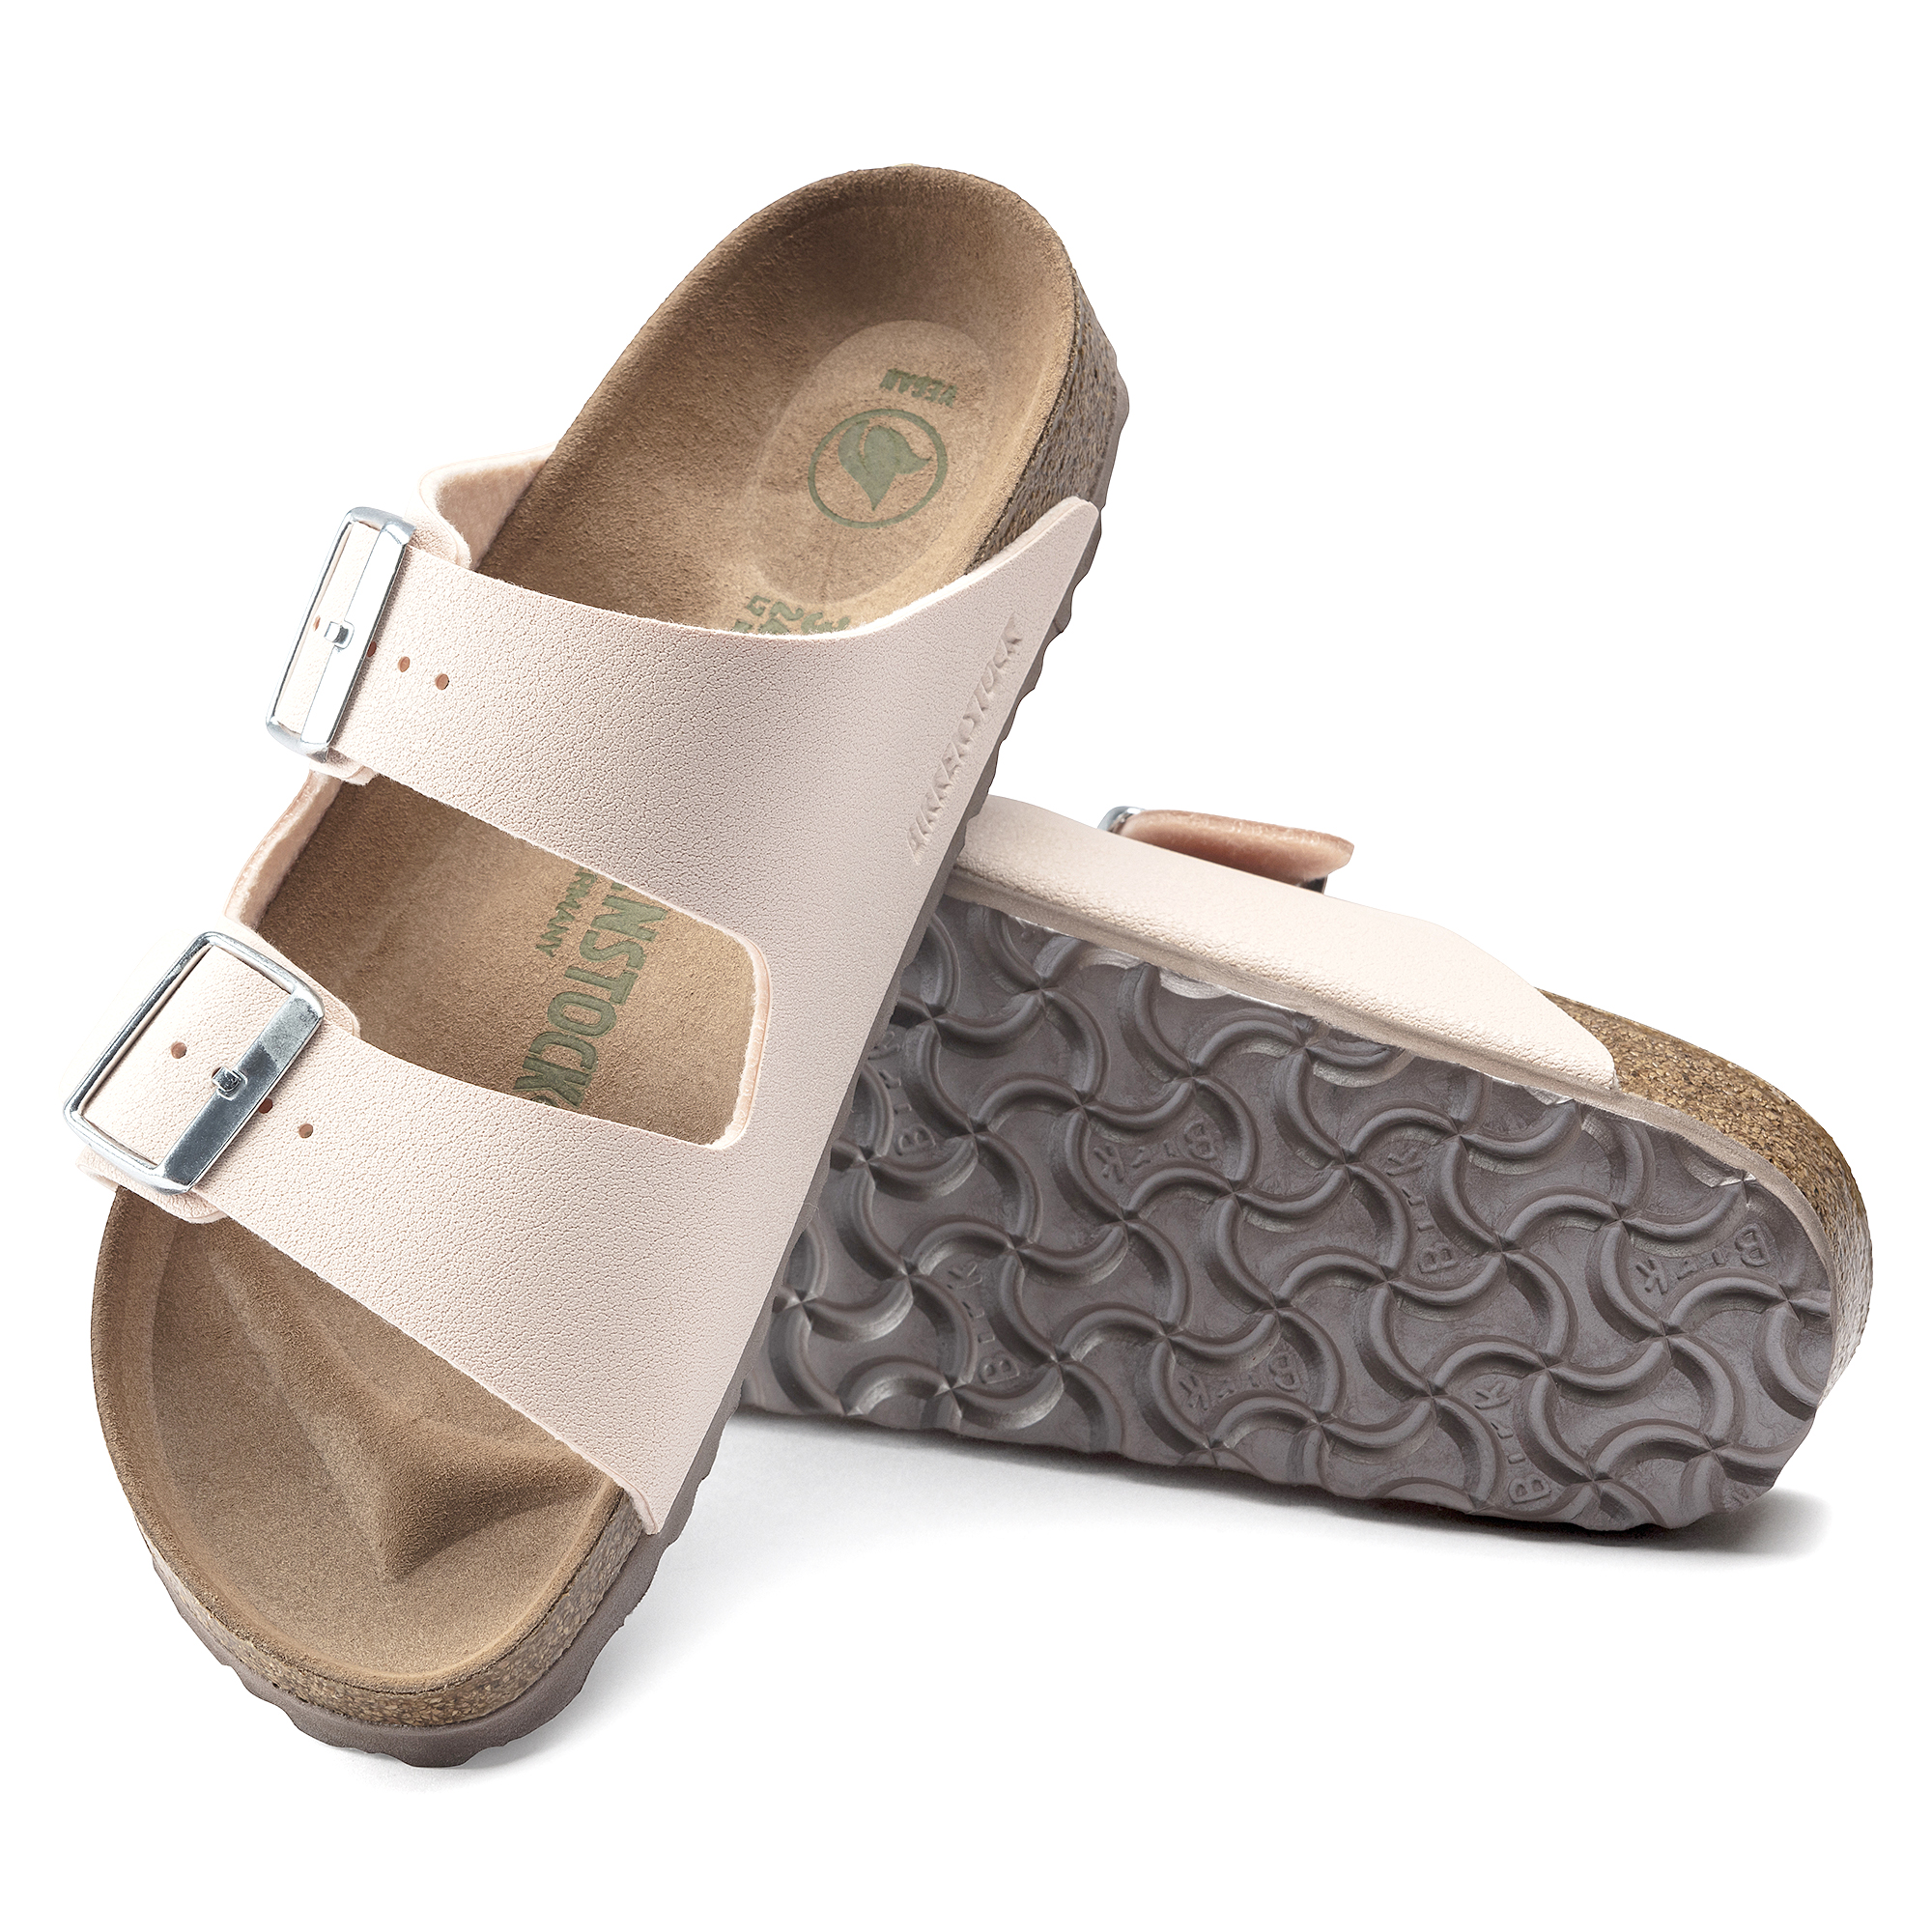 Birkenstock Women's Arizona Shearling Footbed Sandals (Desert Light Rose) - Size 38.0 M